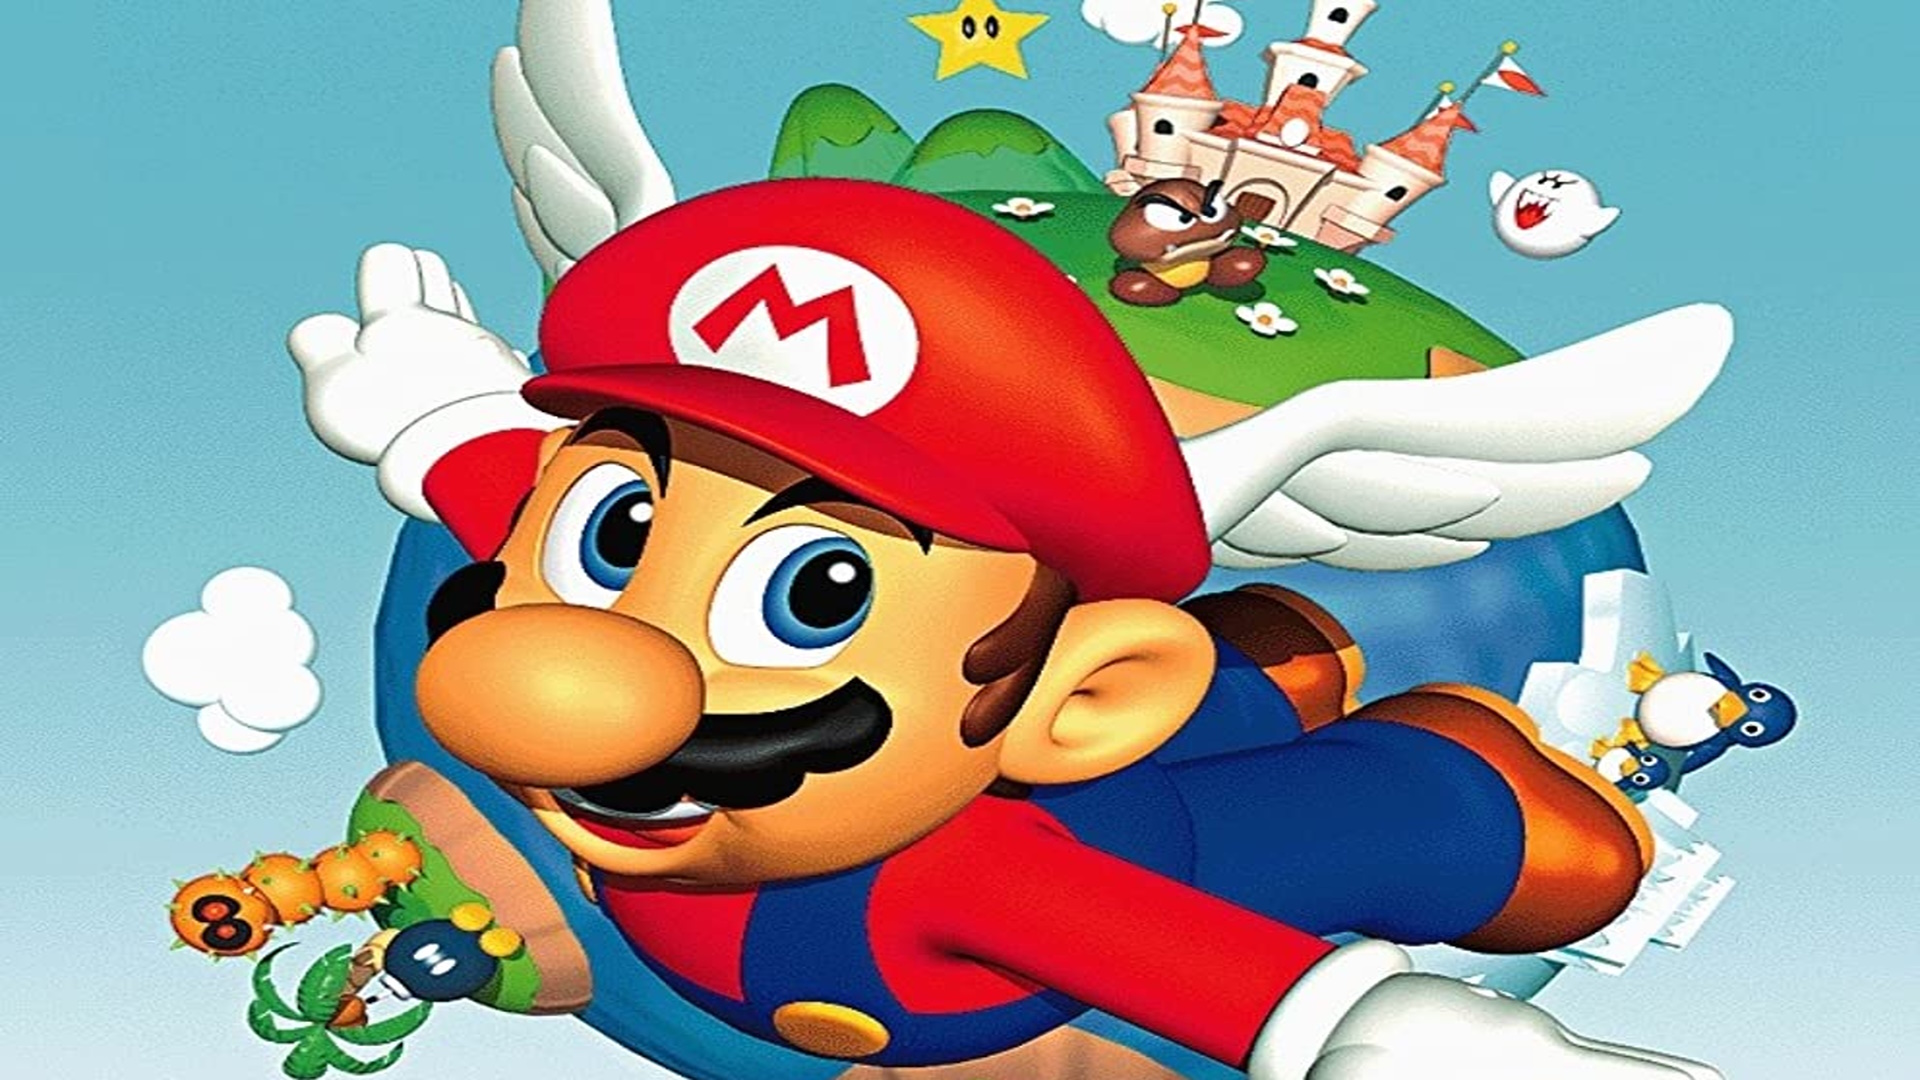 Speedrunner Beats Super Mario Odyssey in New World Record Time